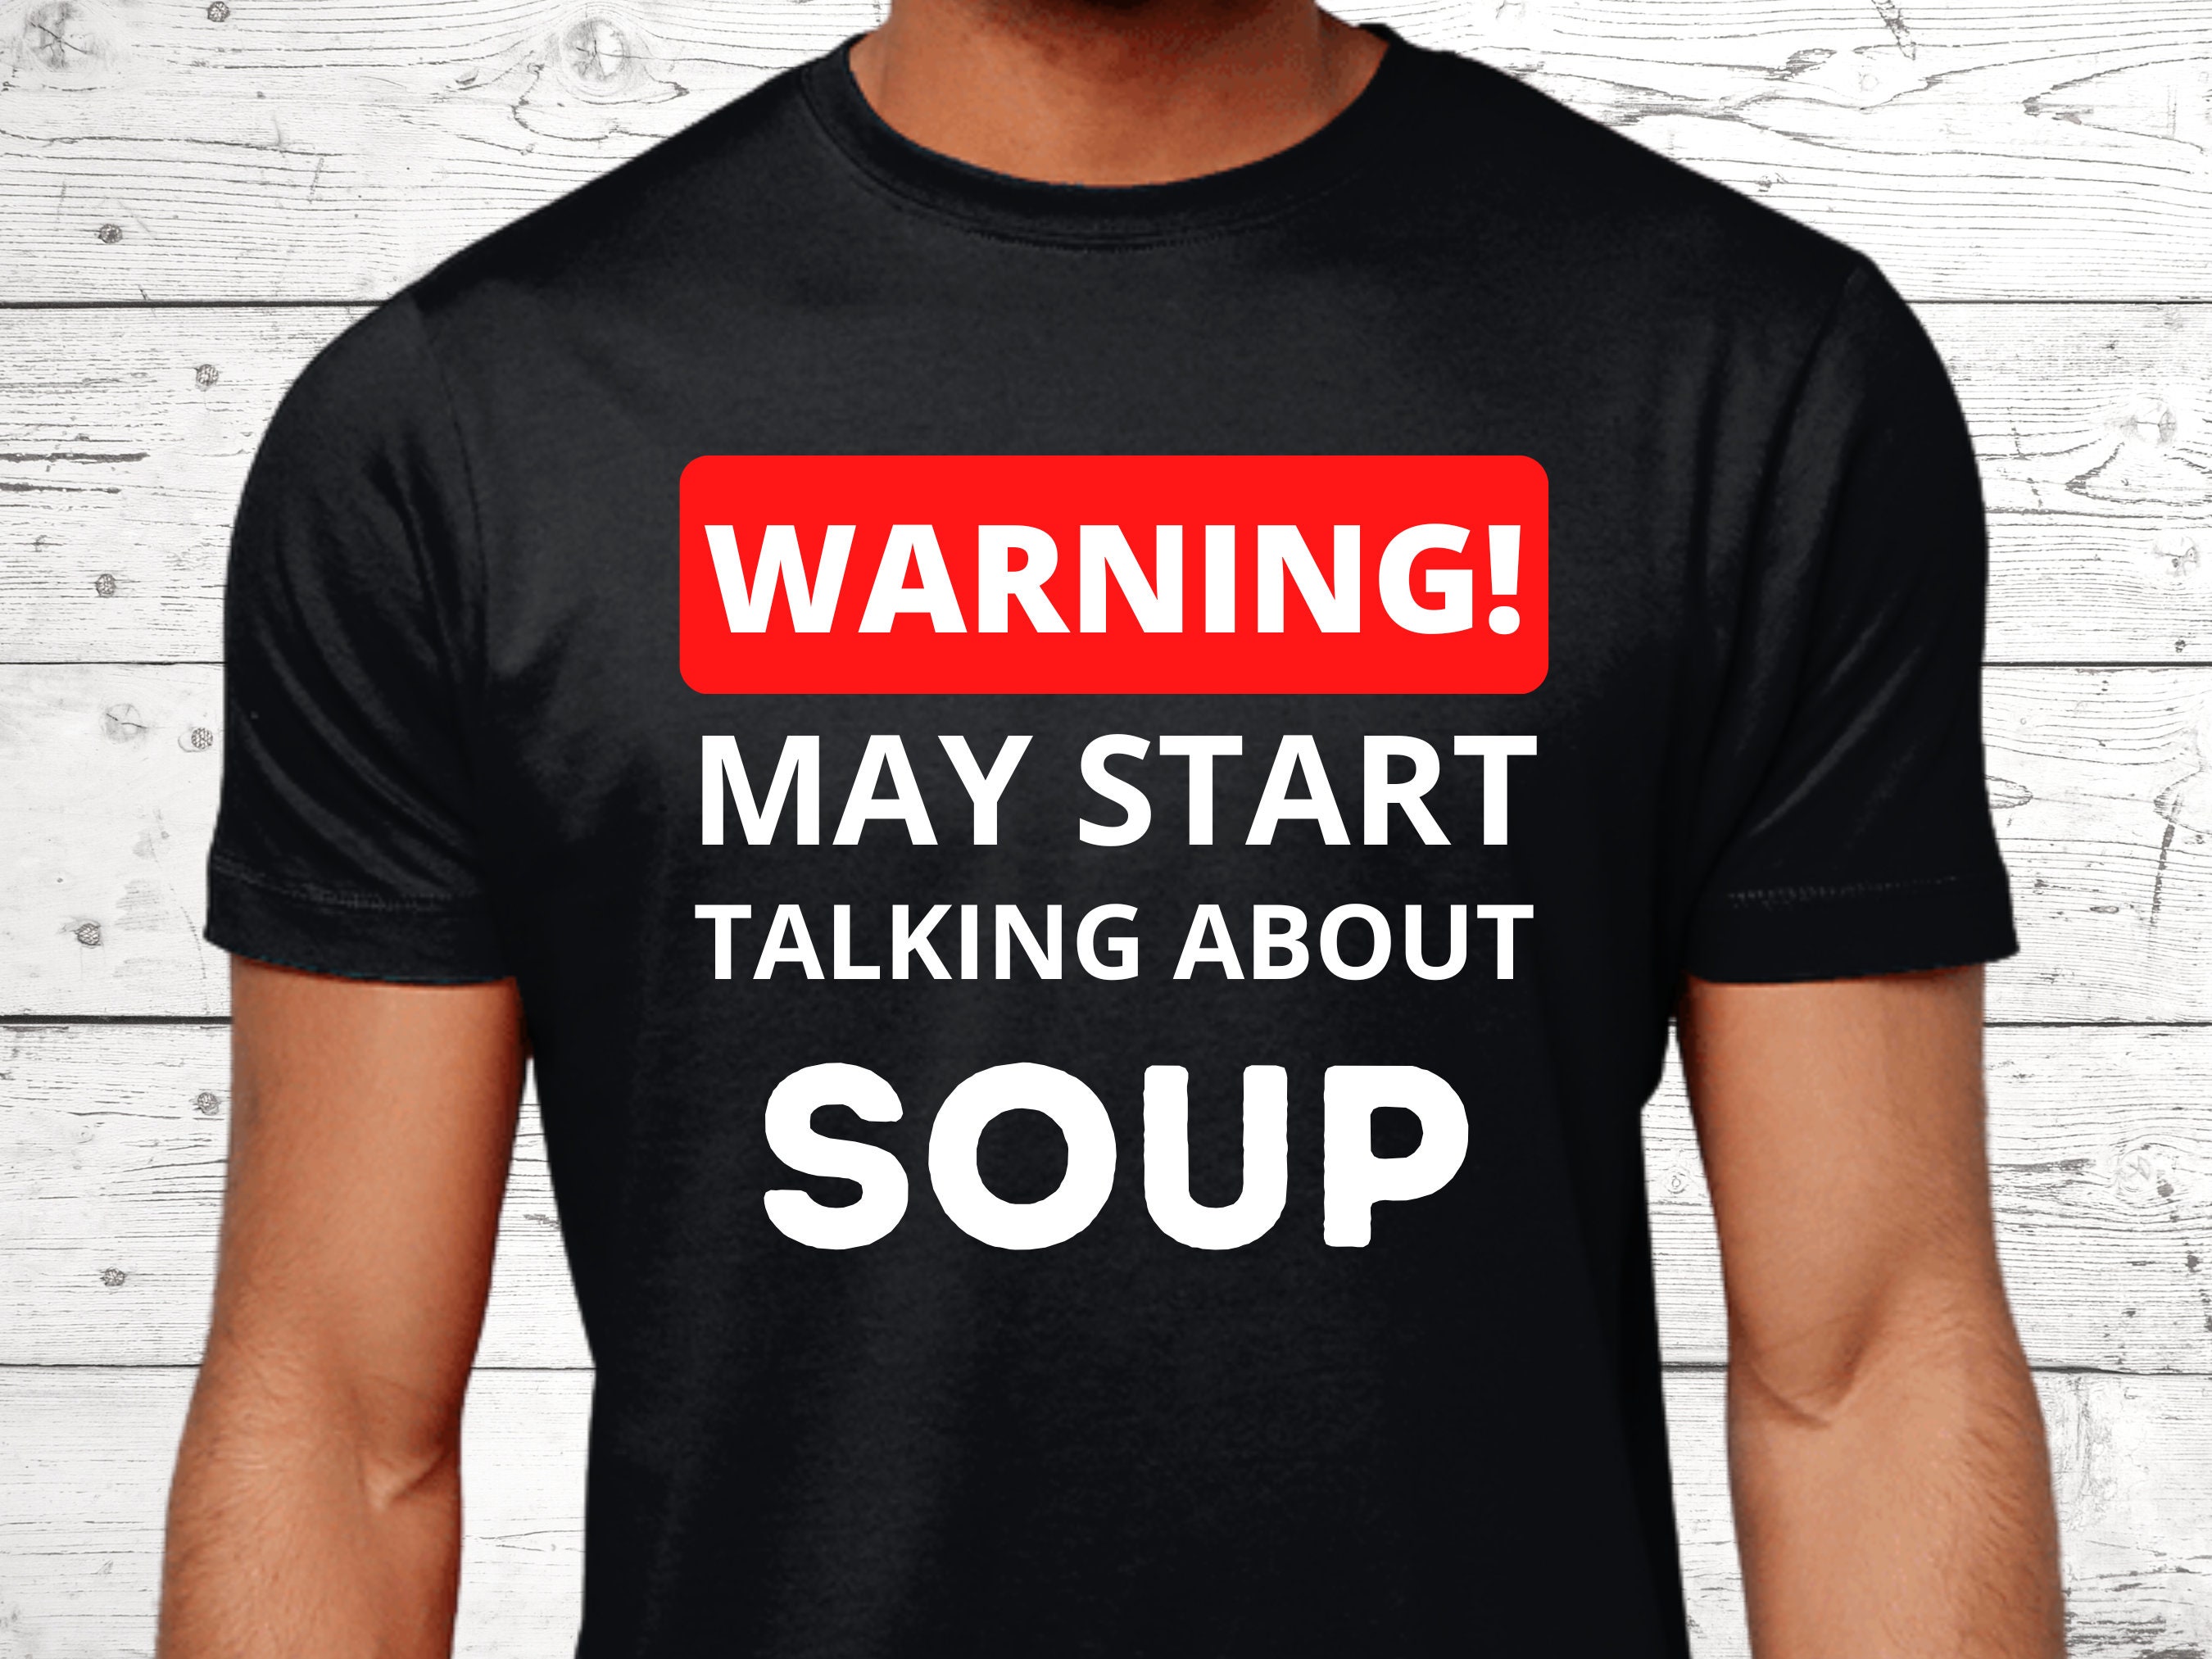  Soup Slut Hearts Funny Saying Adorable T-Shirt